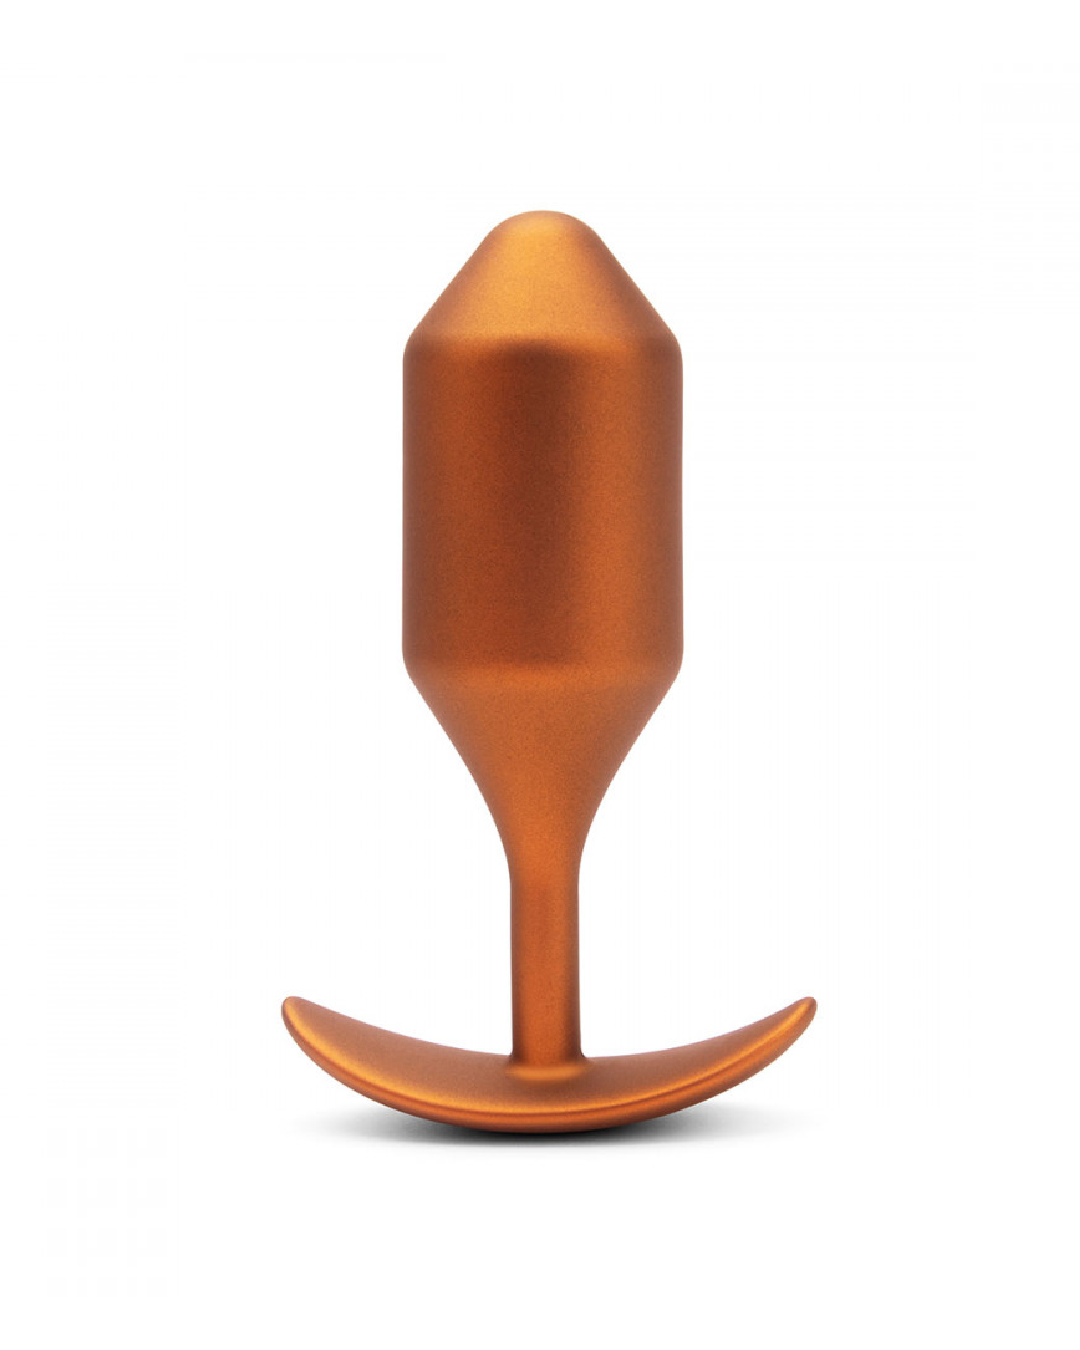 B-vibe Snug Plug 4 XL Weighted Silicone Butt Plug (257 grams) - Sunburst Orange 